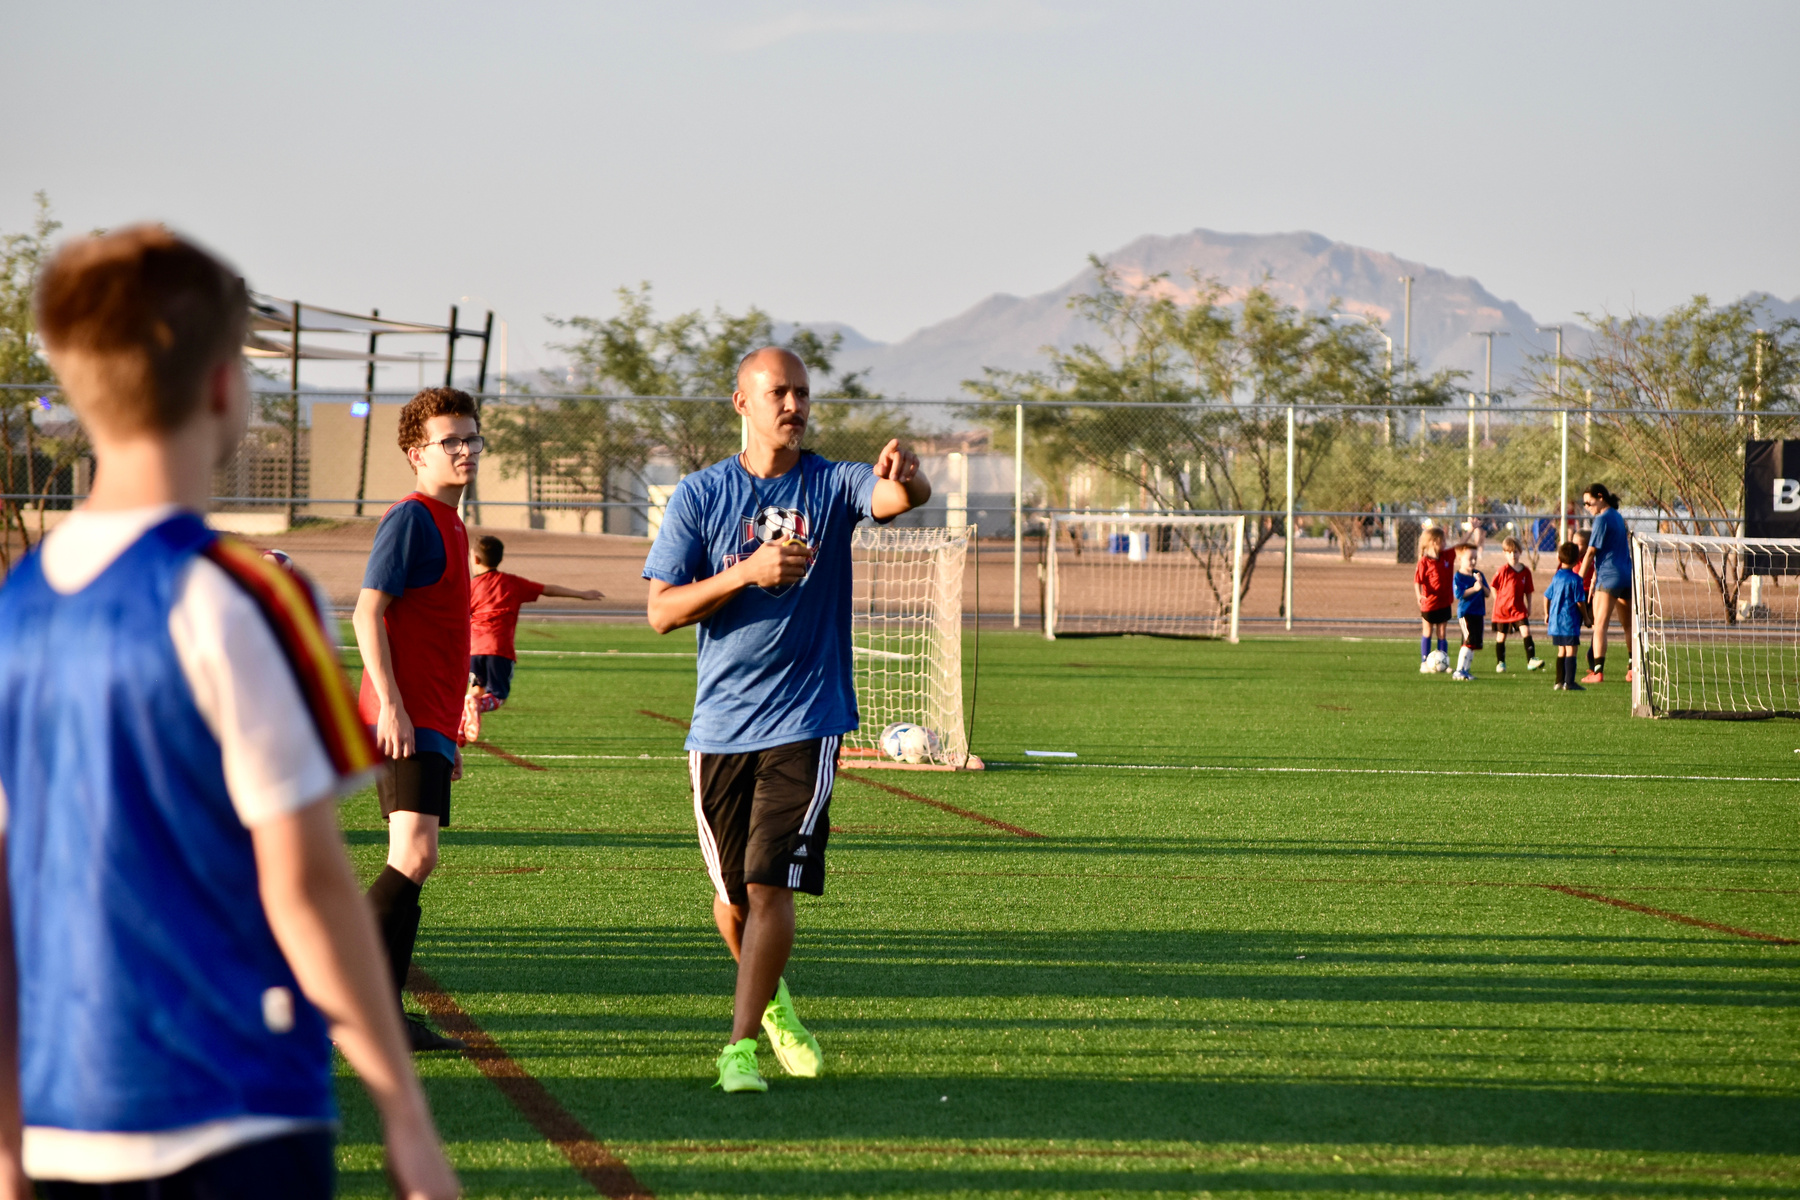 Coach Tyrone instructing youth soccer players in Mesa, Arizona
Coaching soccer East Valley Arizona